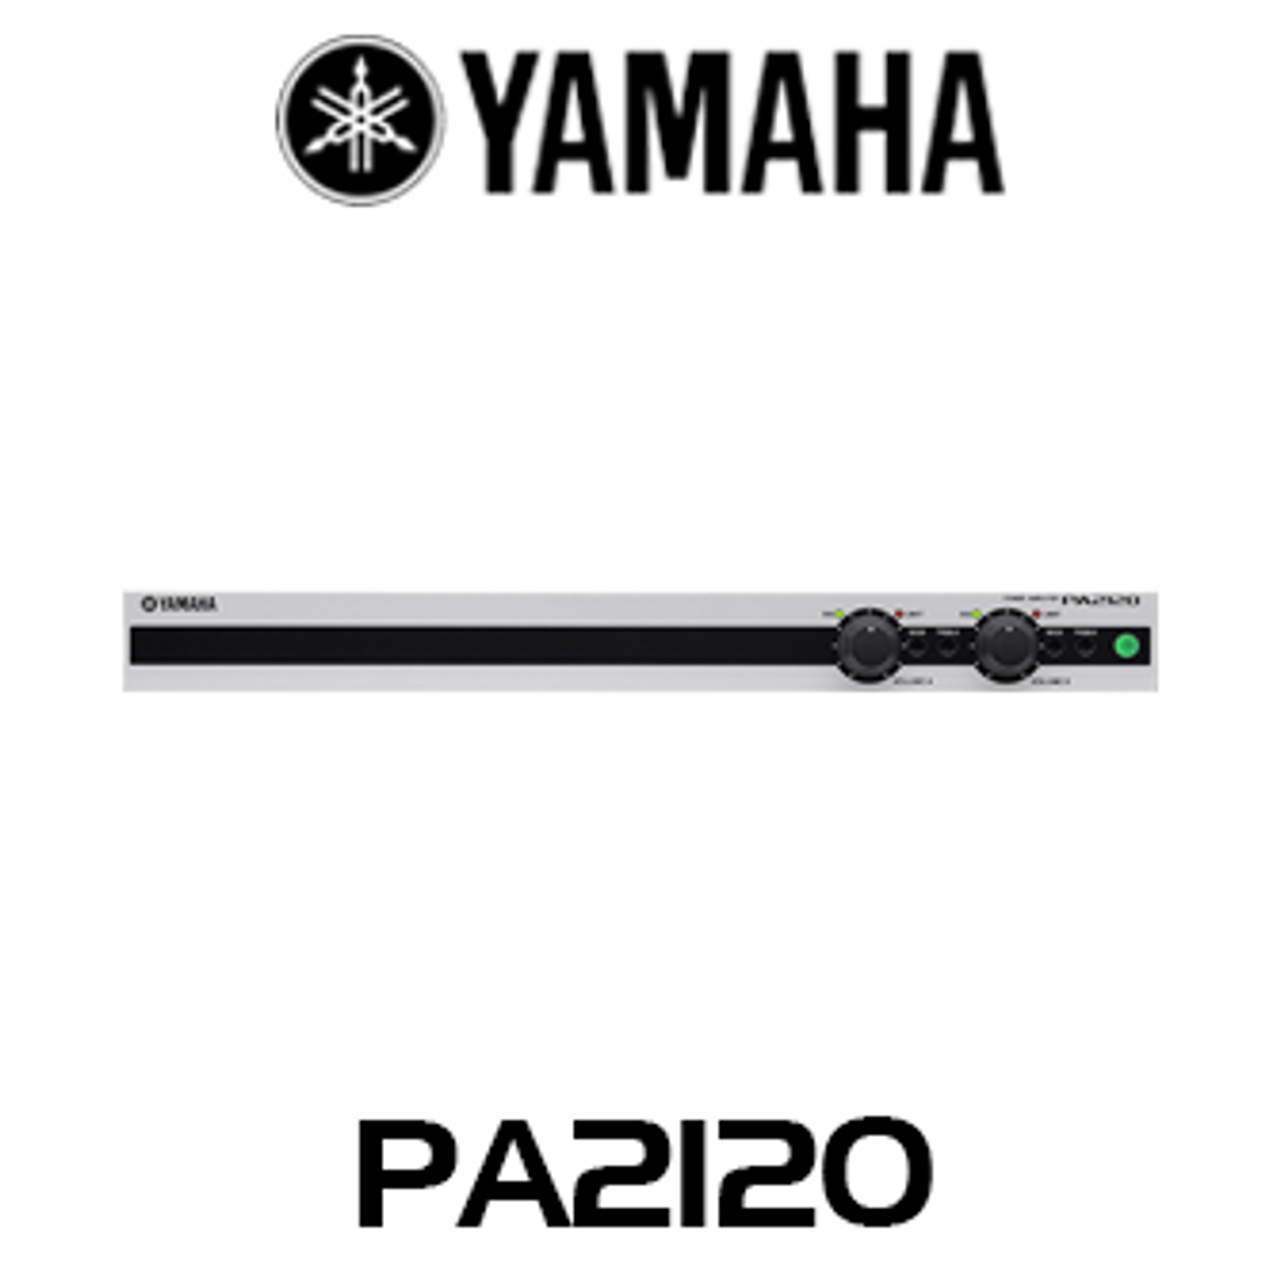 Yamaha PA2120 2 x 120W Compact Amplifier